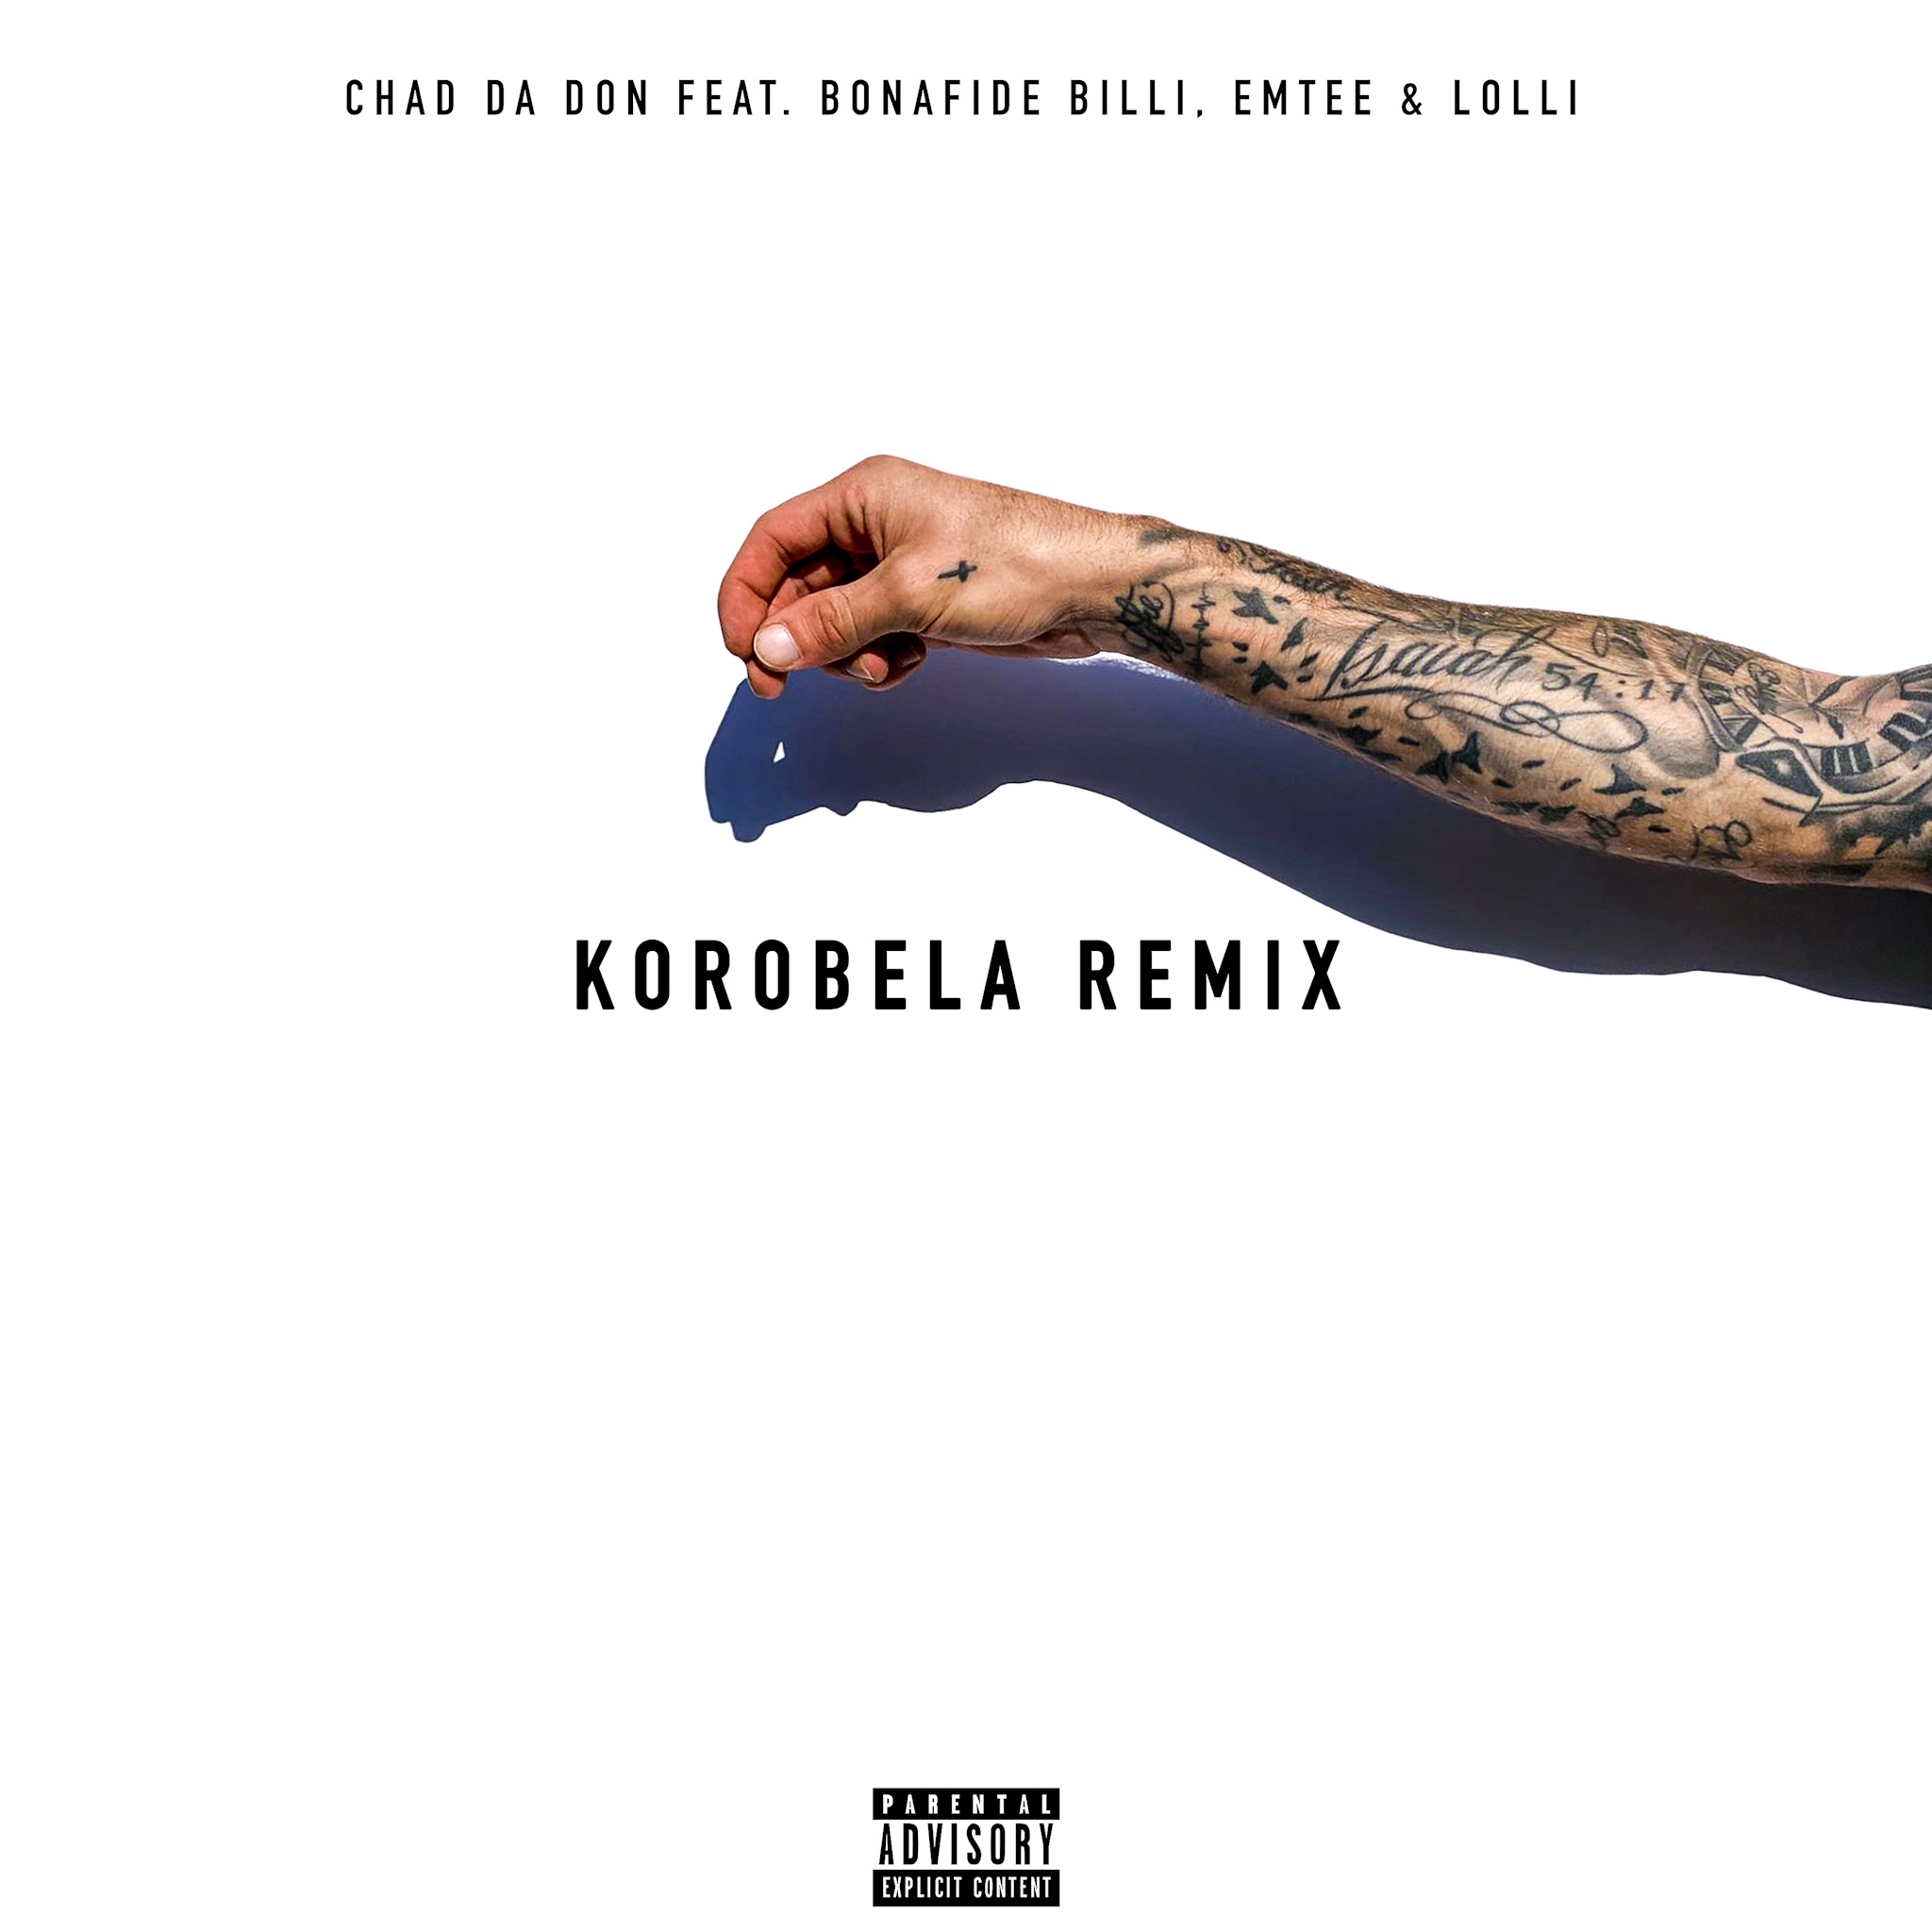 Chad Da Don returns with #KorobelaRemix featuring Emtee, Bonafide Billi and Lolli